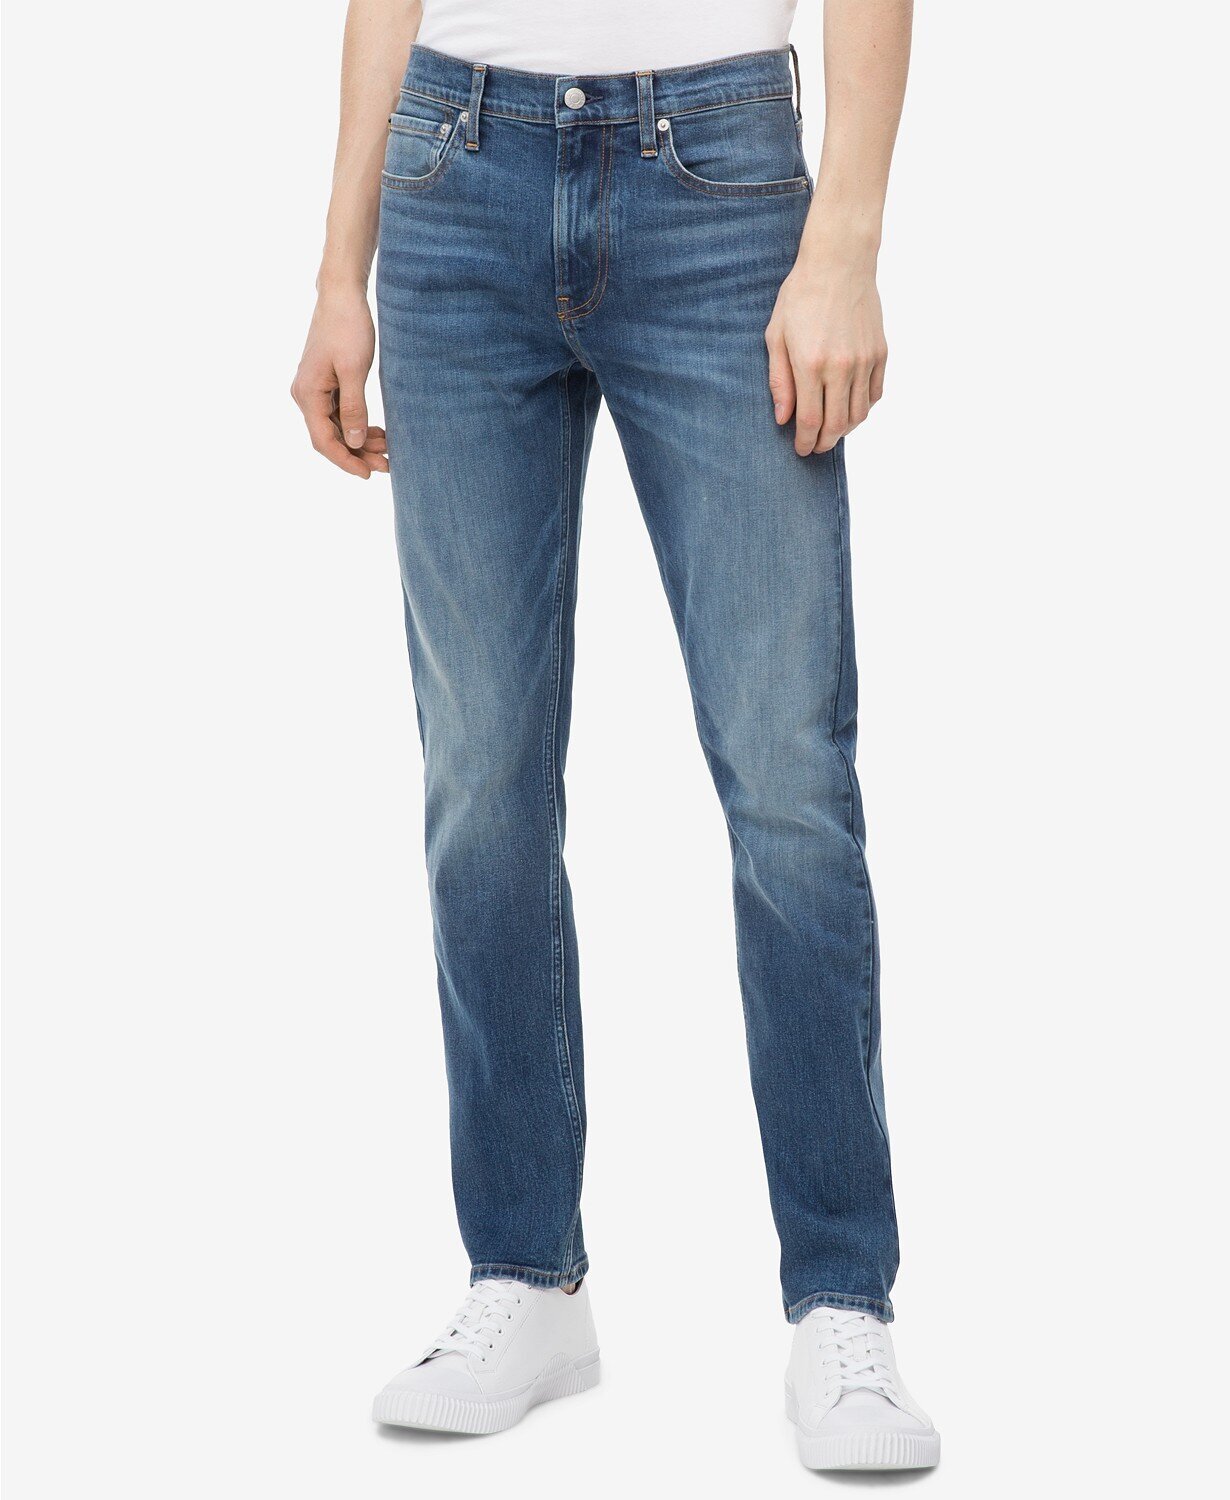 mens skinny jeans 26x32